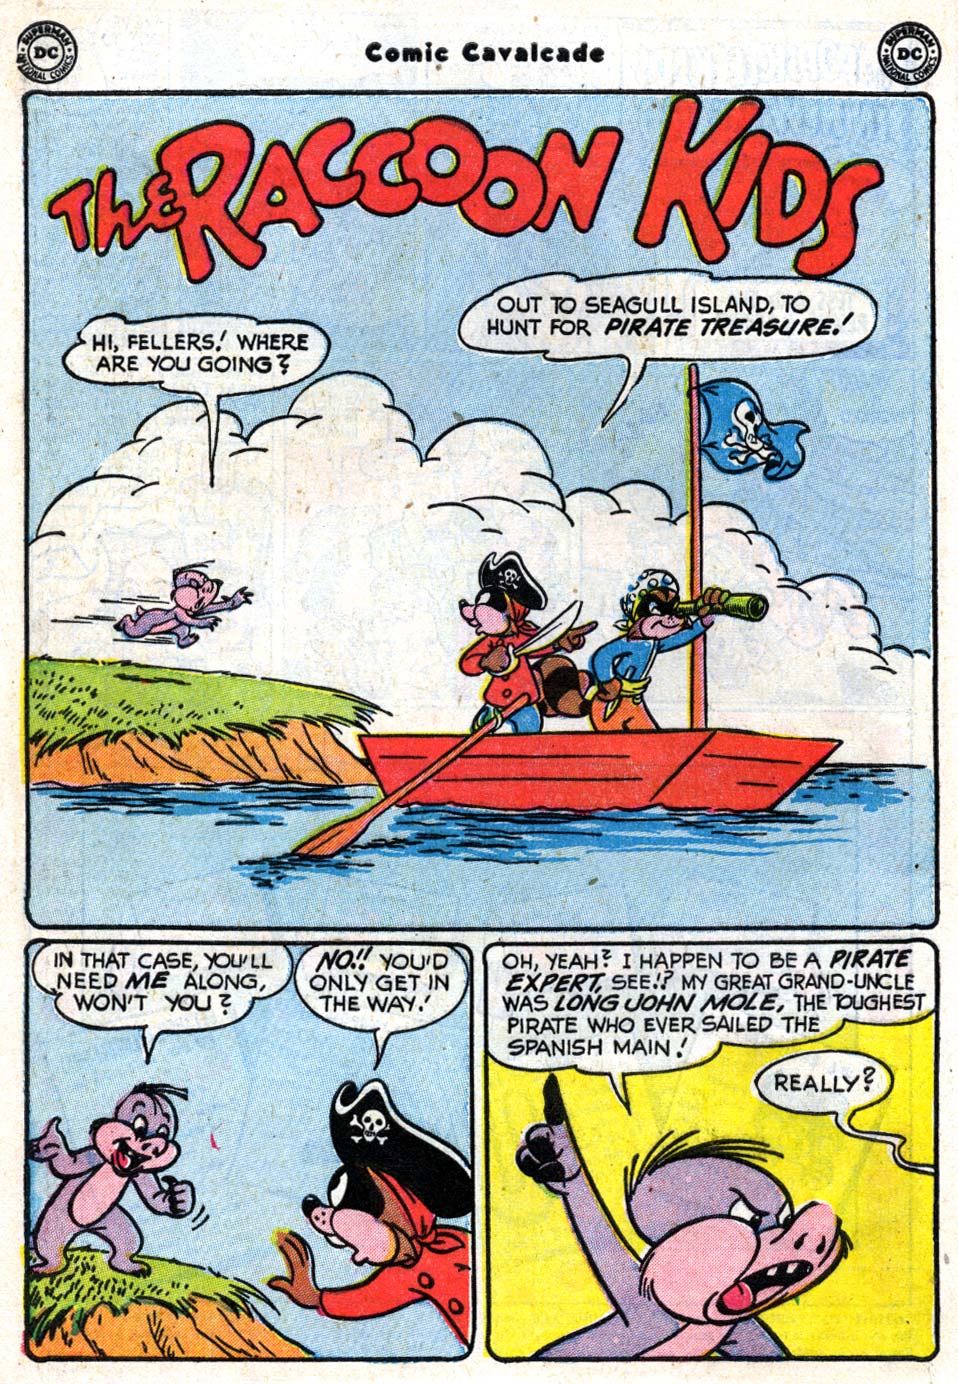 Comic Cavalcade issue 46 - Page 26